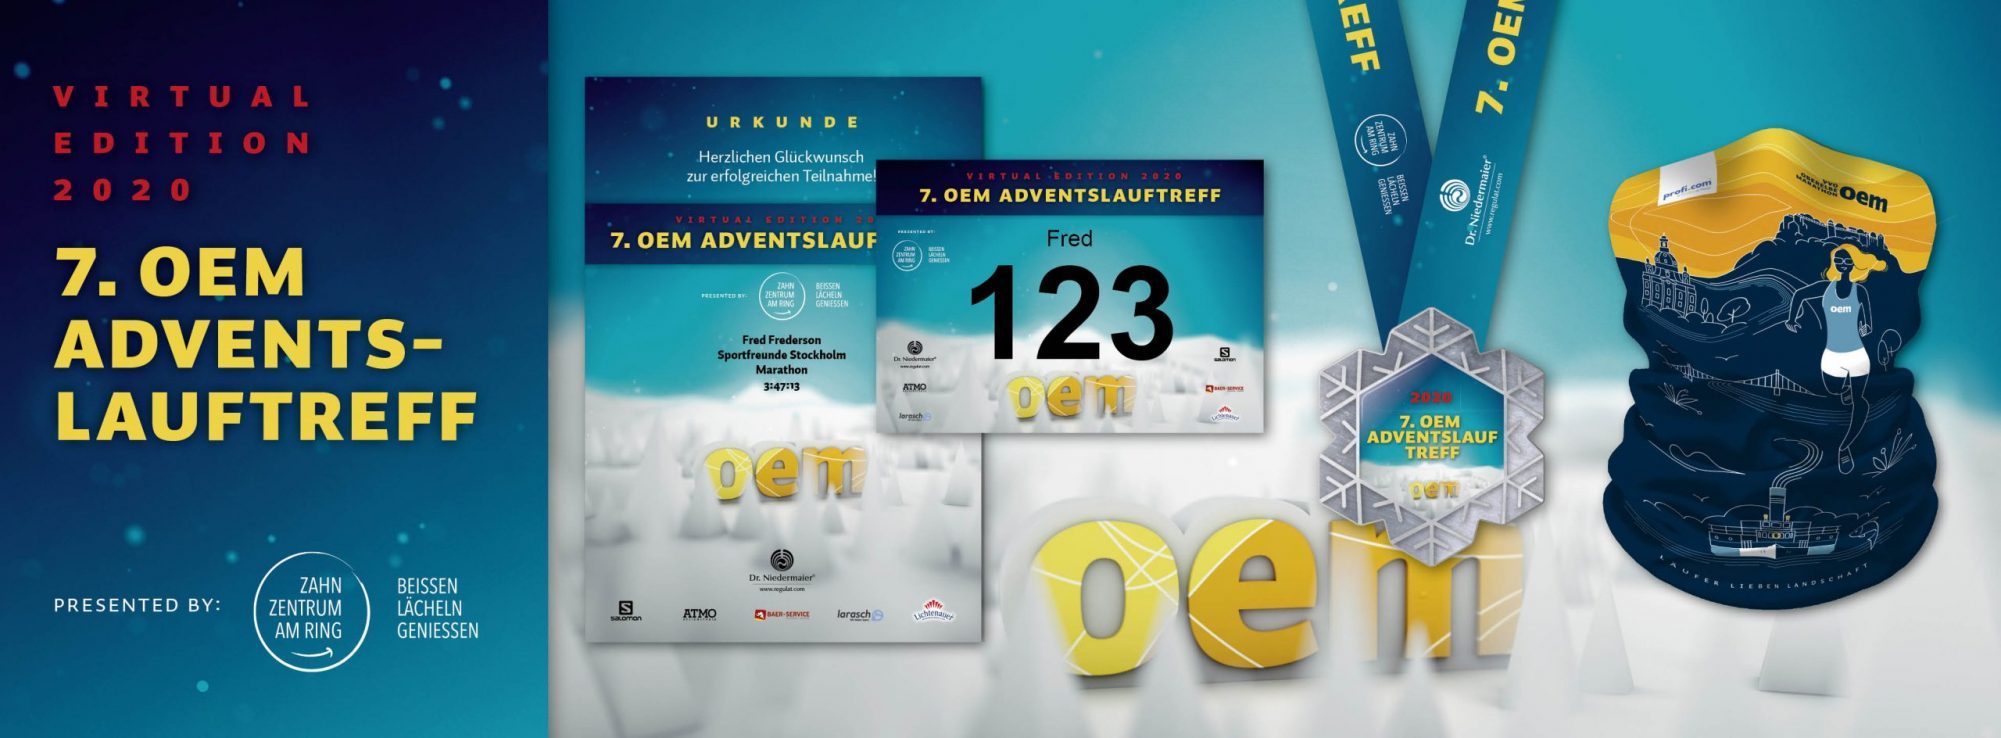 7. OEM-Adventslauf 2020 | Virtuell Edition